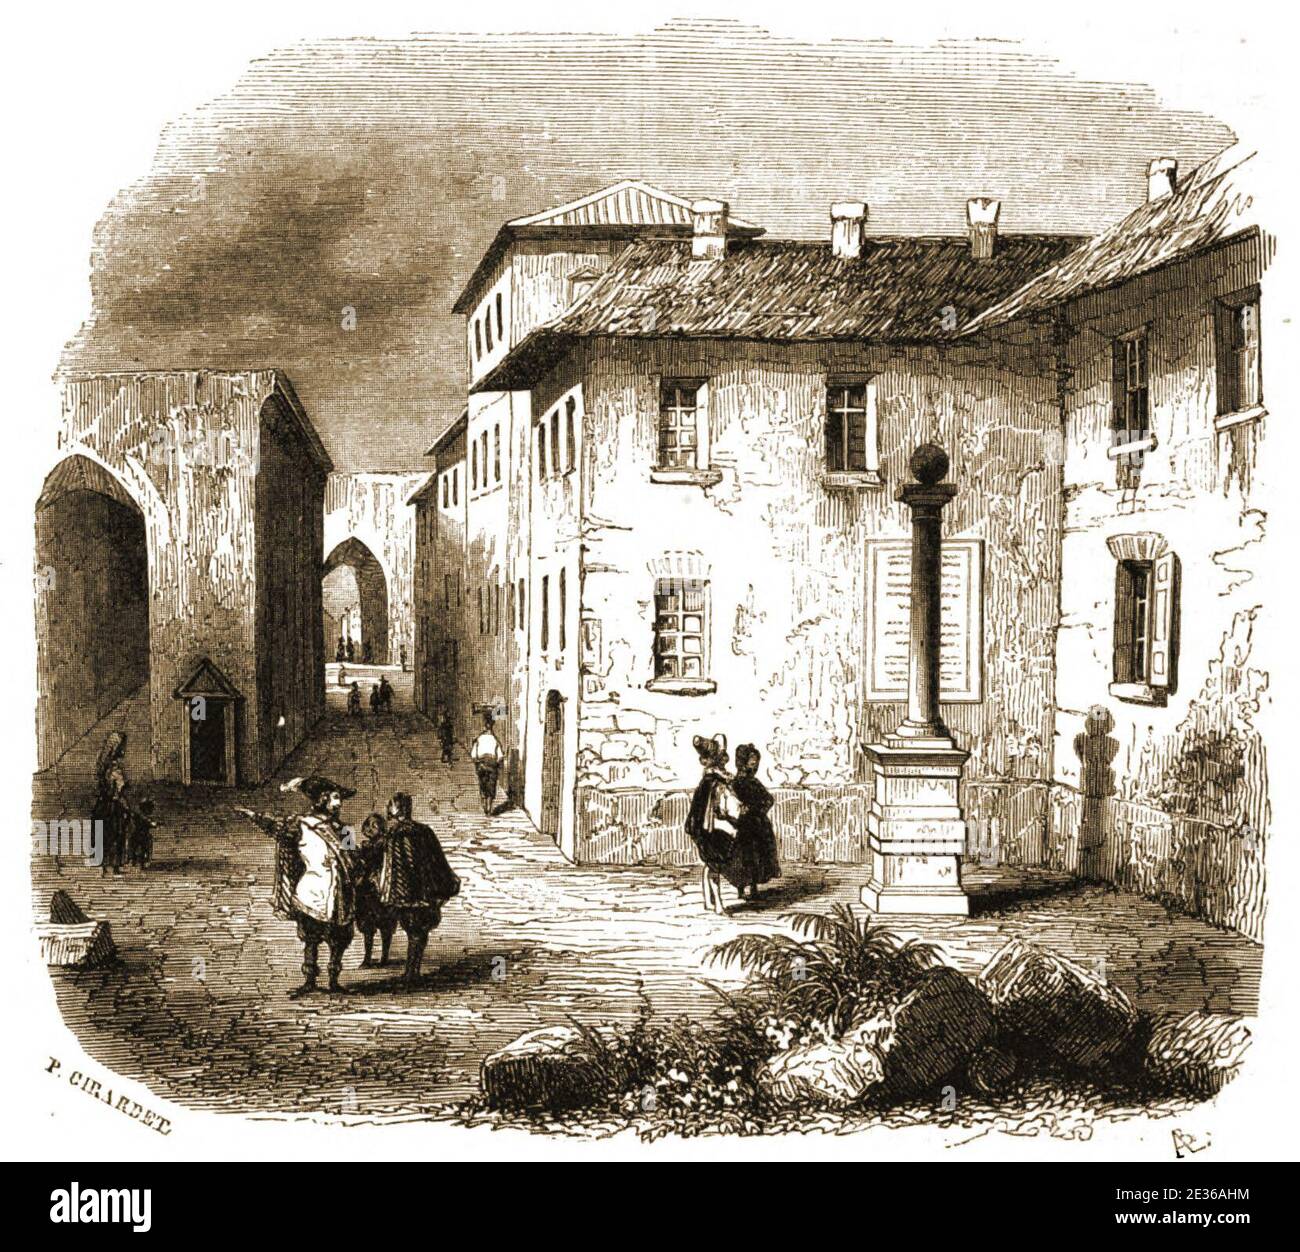 Magasin Pittoresque 1843 - La Colonne Infame. Stockfoto